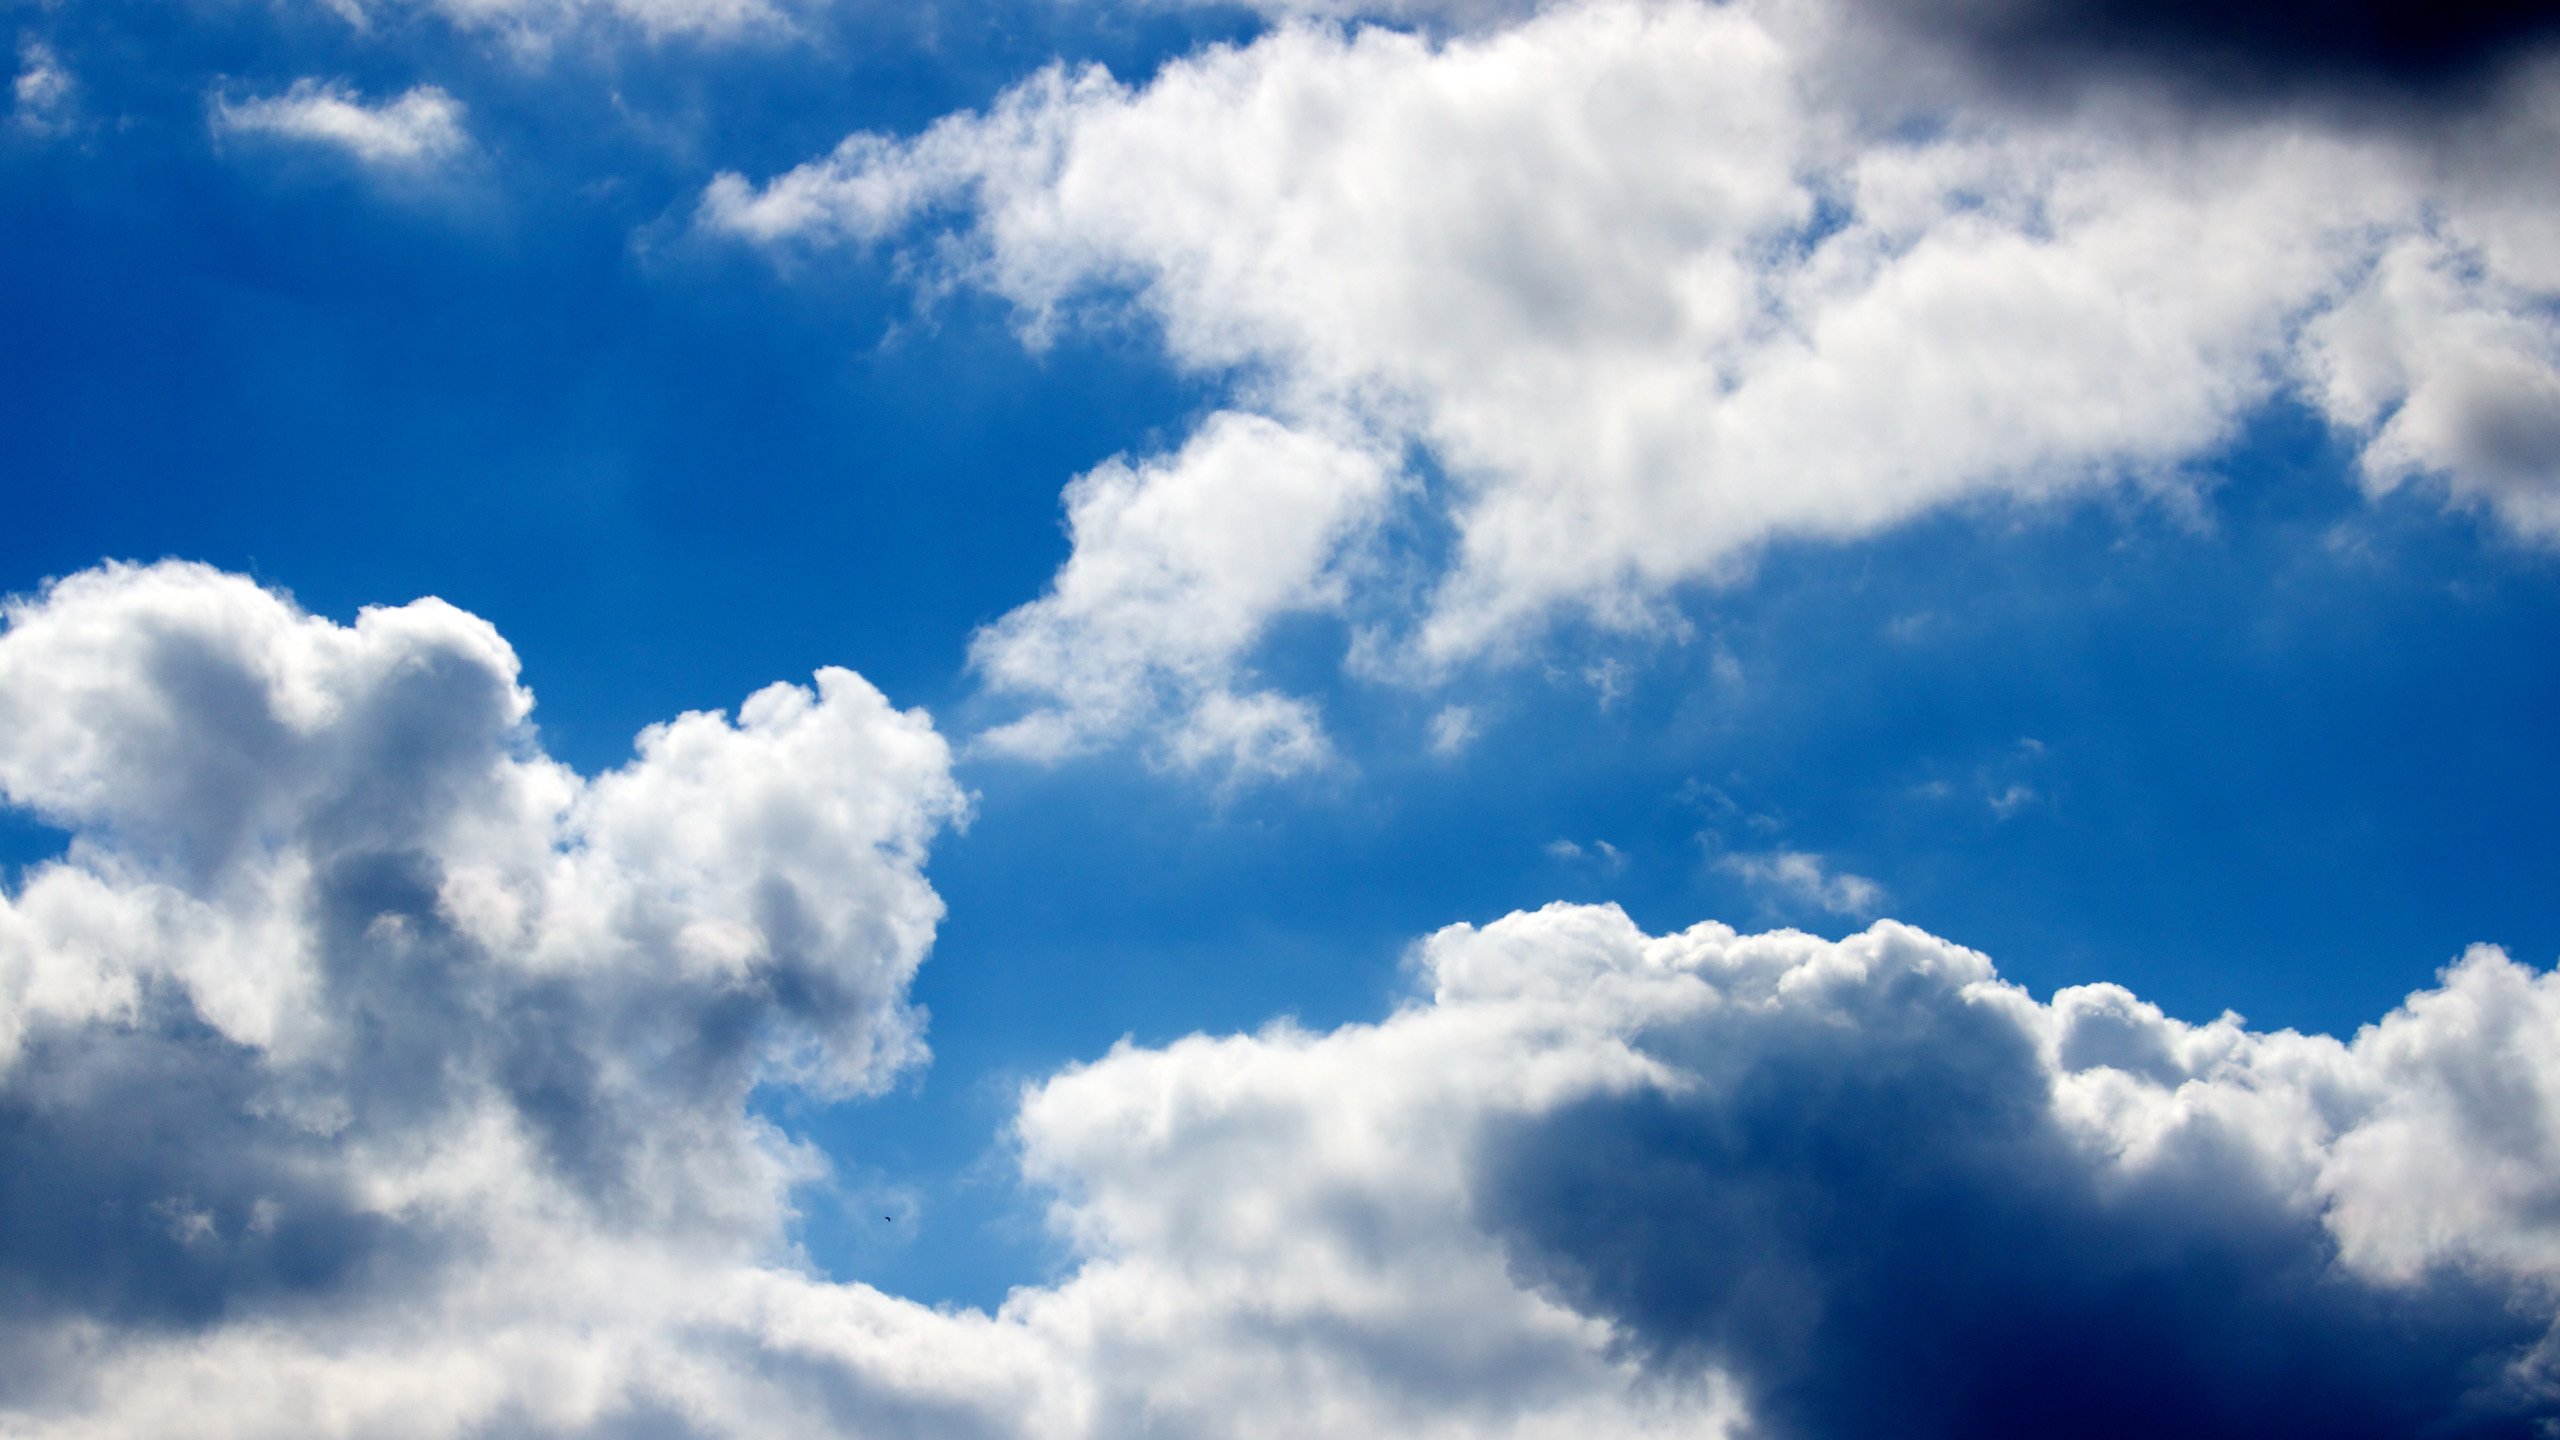 Обои небо. Облака. Обои на рабочий стол небо облака. Солнце в облаках. Фон неба с облаками высокого качества.